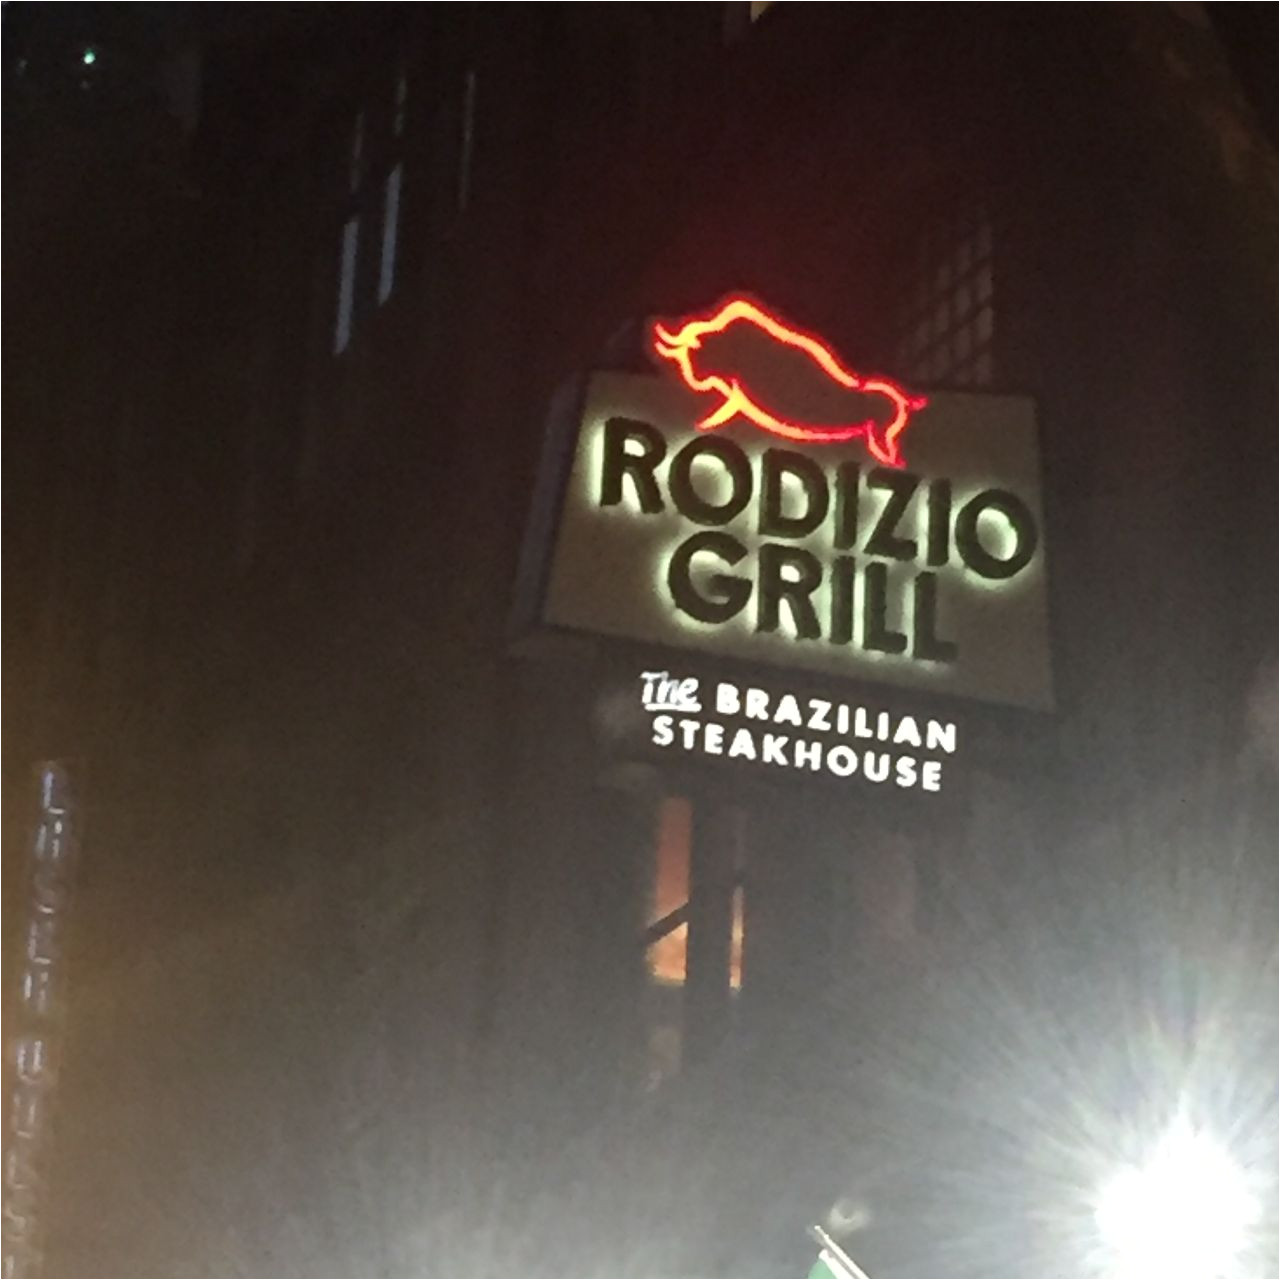 rodizio grill the brazilian steak house restaurant nashville tn opentable